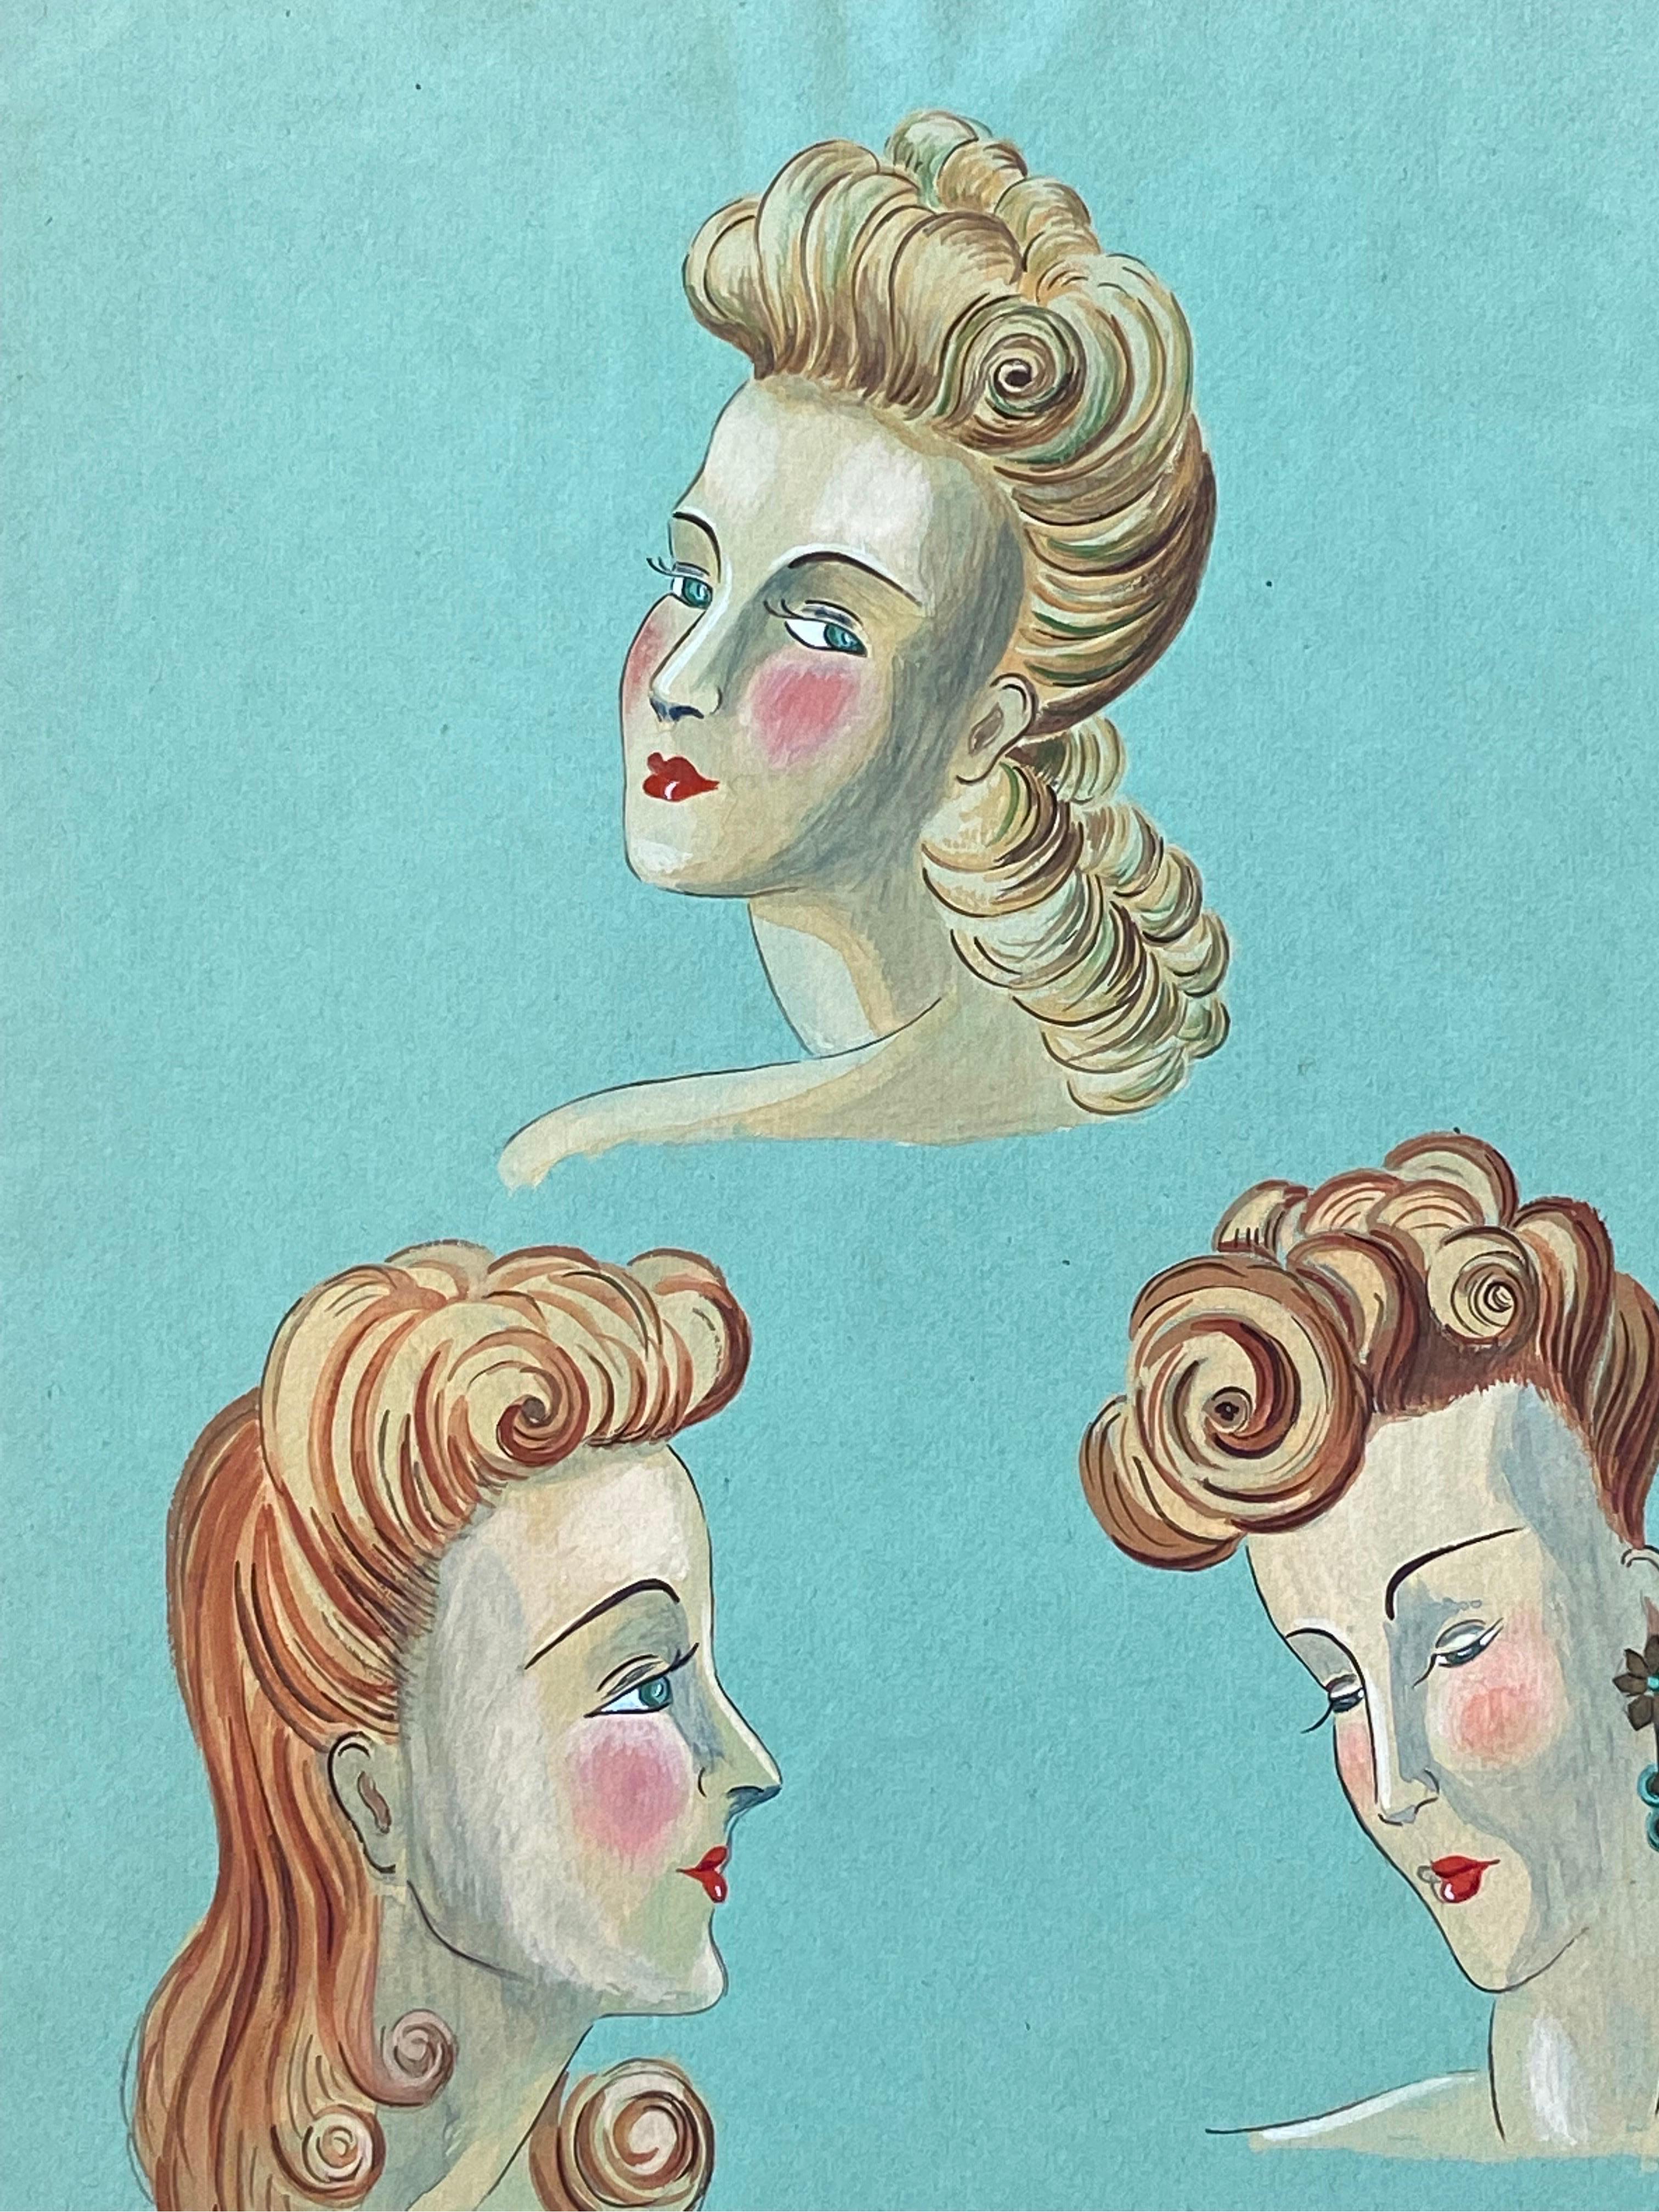 1940's French Fashion Illustration - Elegant Three Women Face Portraits - Painting by Geneviève Thomas